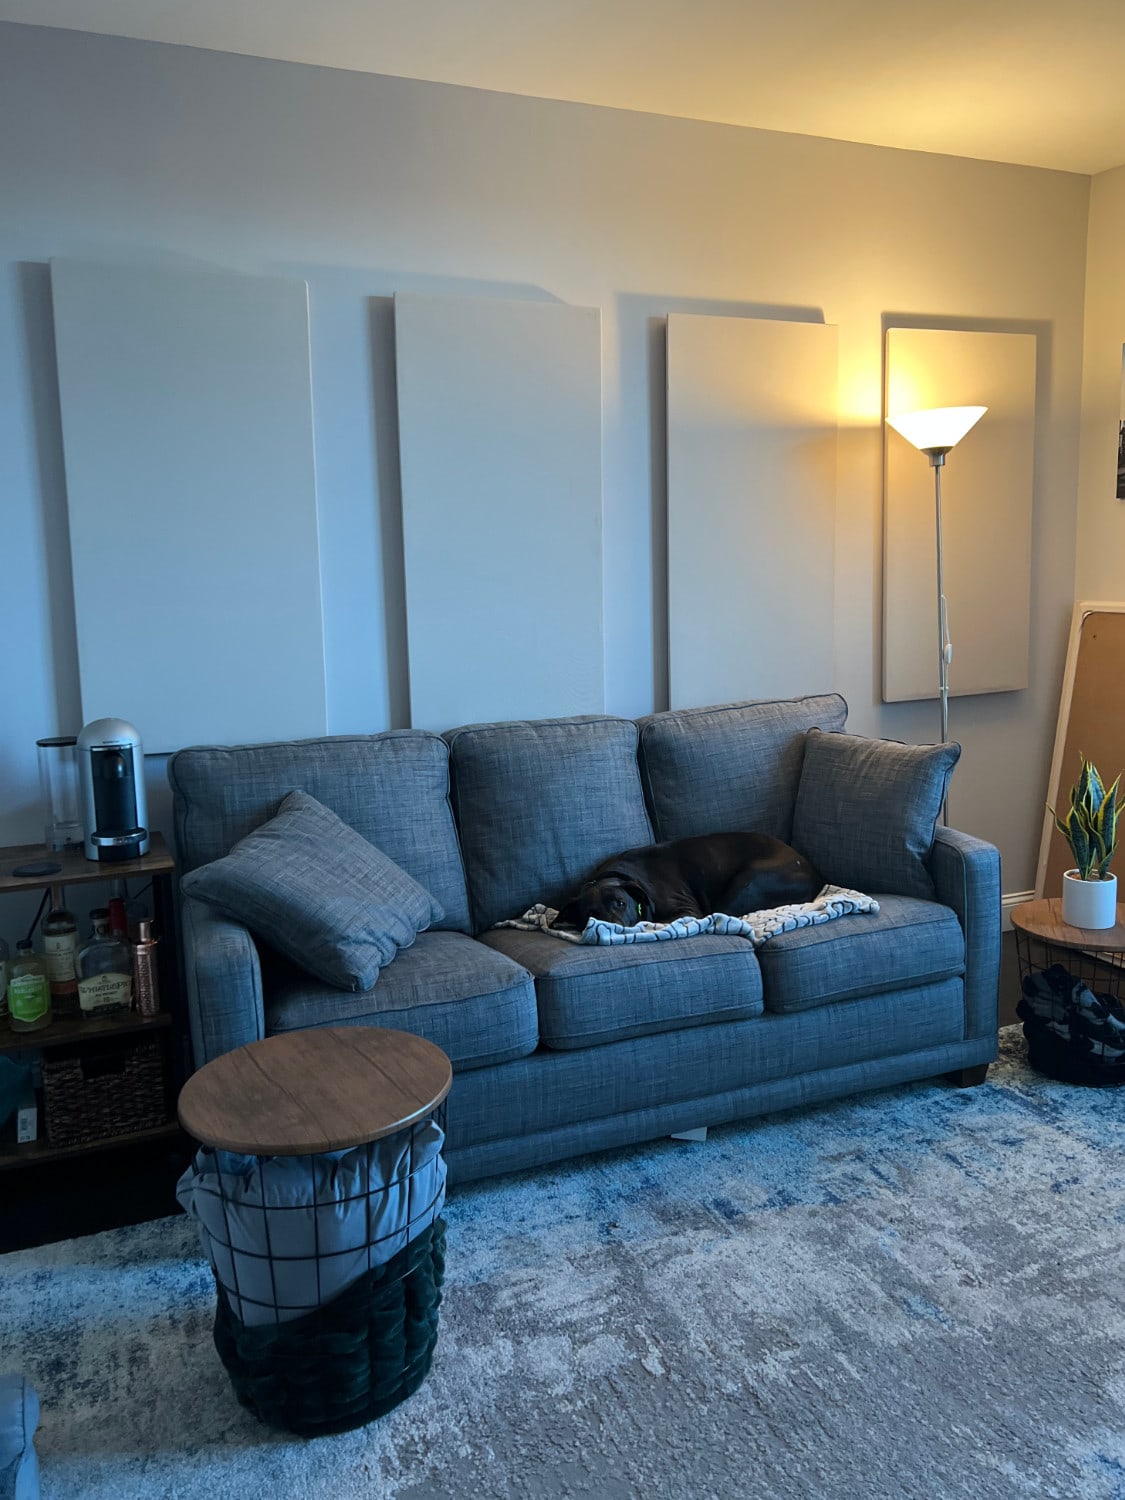 Home Studio with WAVEPro acoustic panels